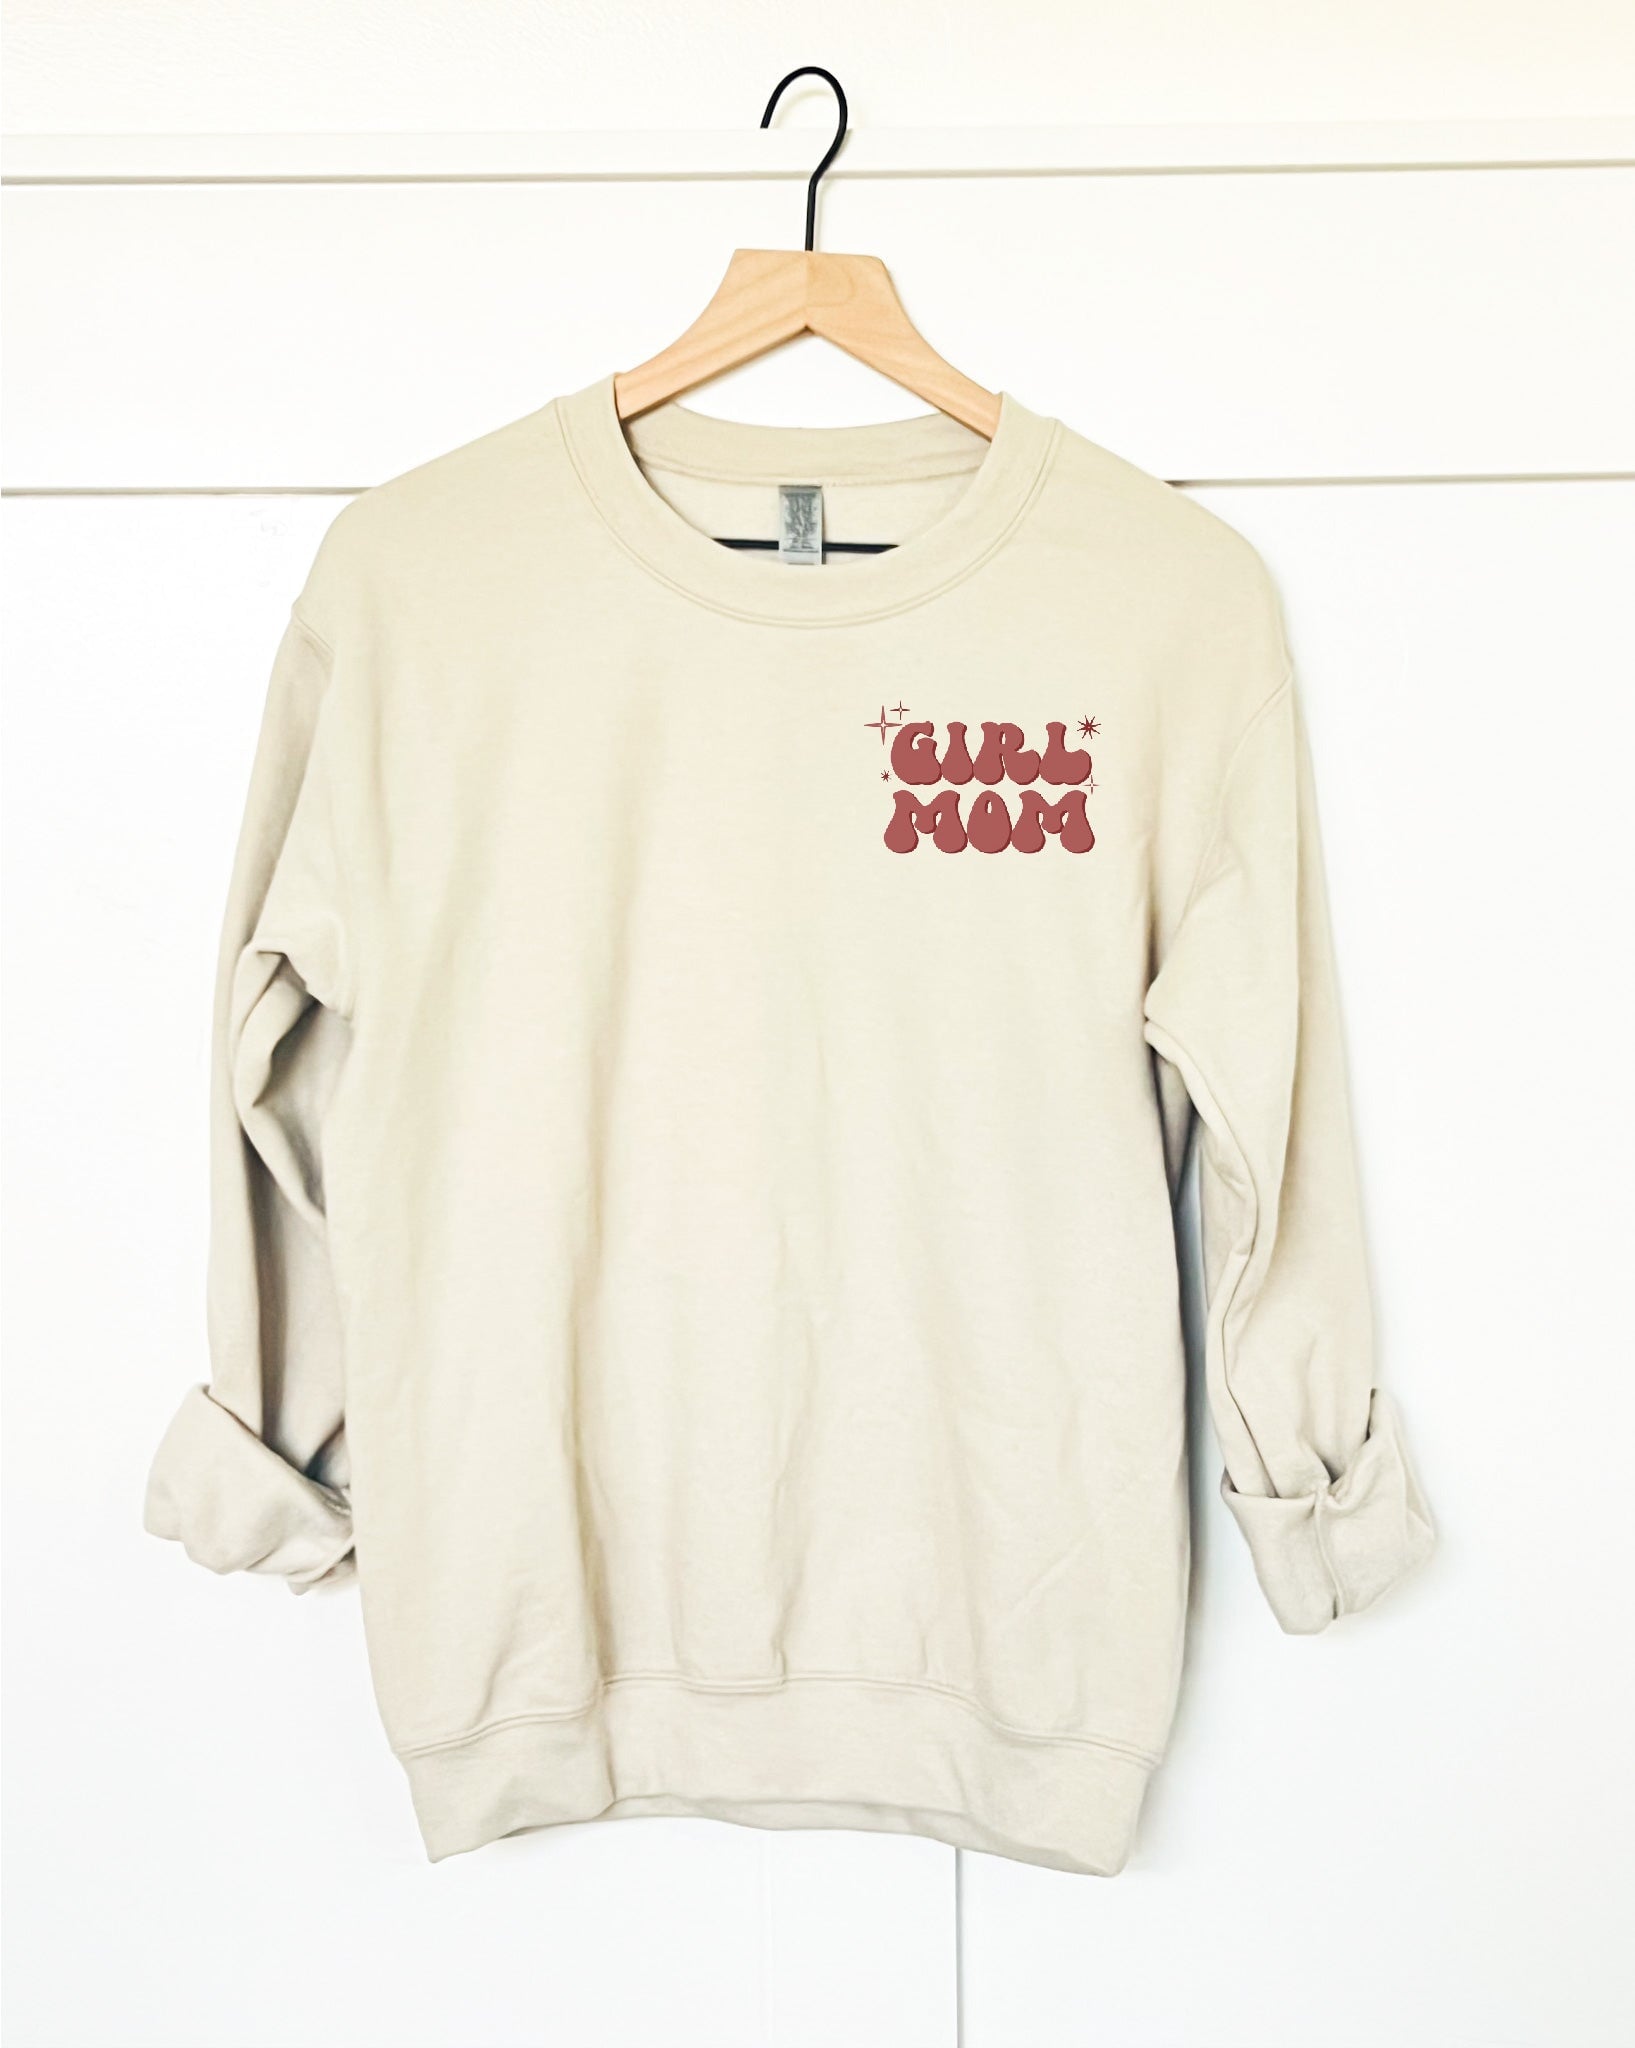 In my girl mom era back print basic sweatshirt Mom collection Gildan 18000 sweatshirt 